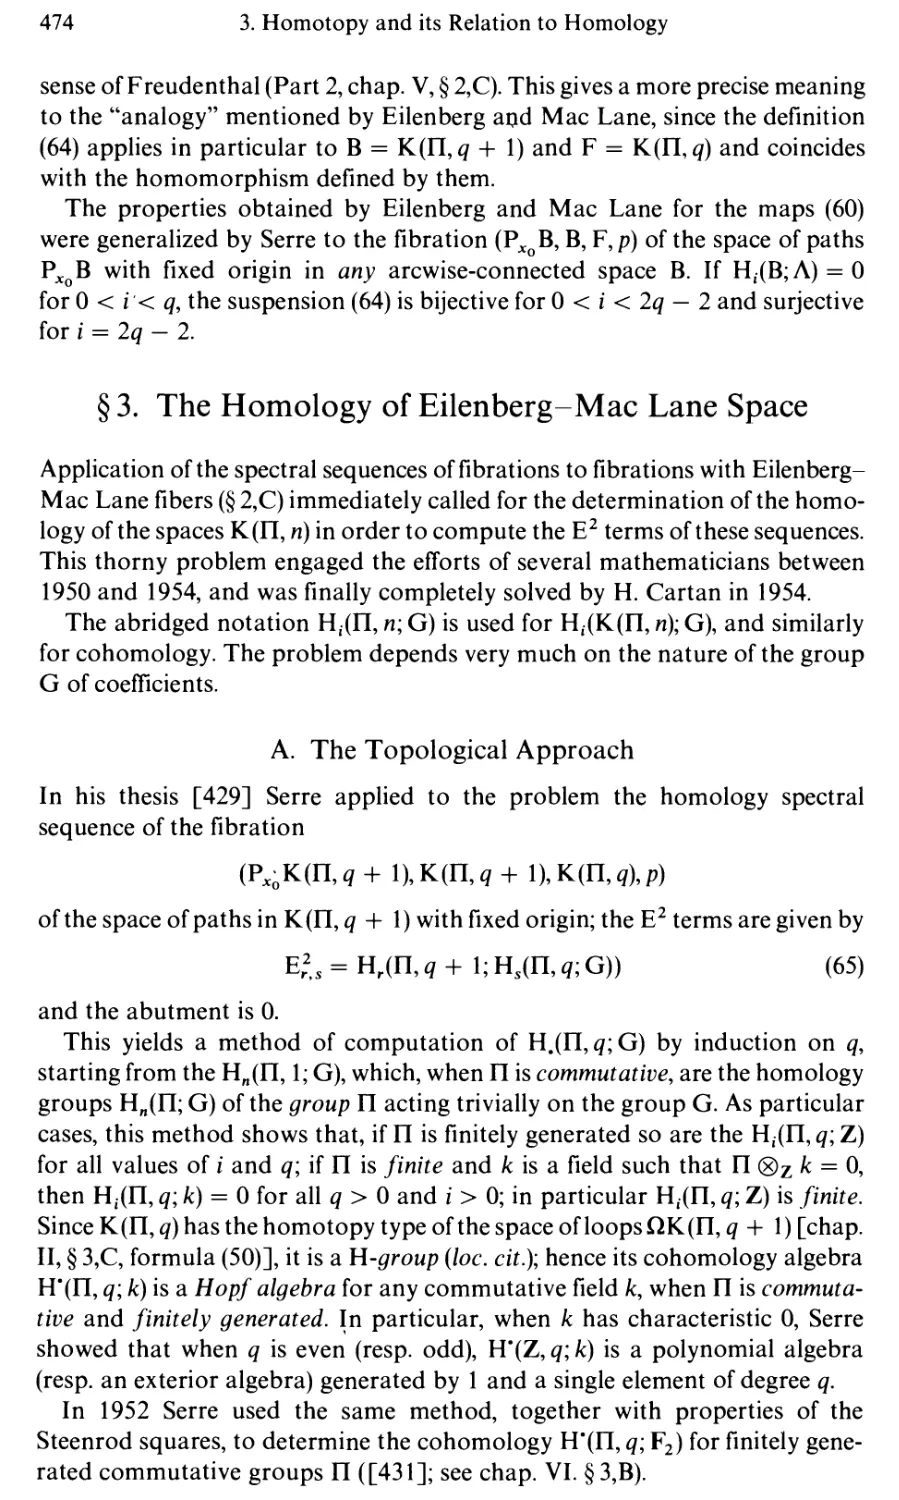 §3. The Homology of Eilenberg-Mac Lane Spaces